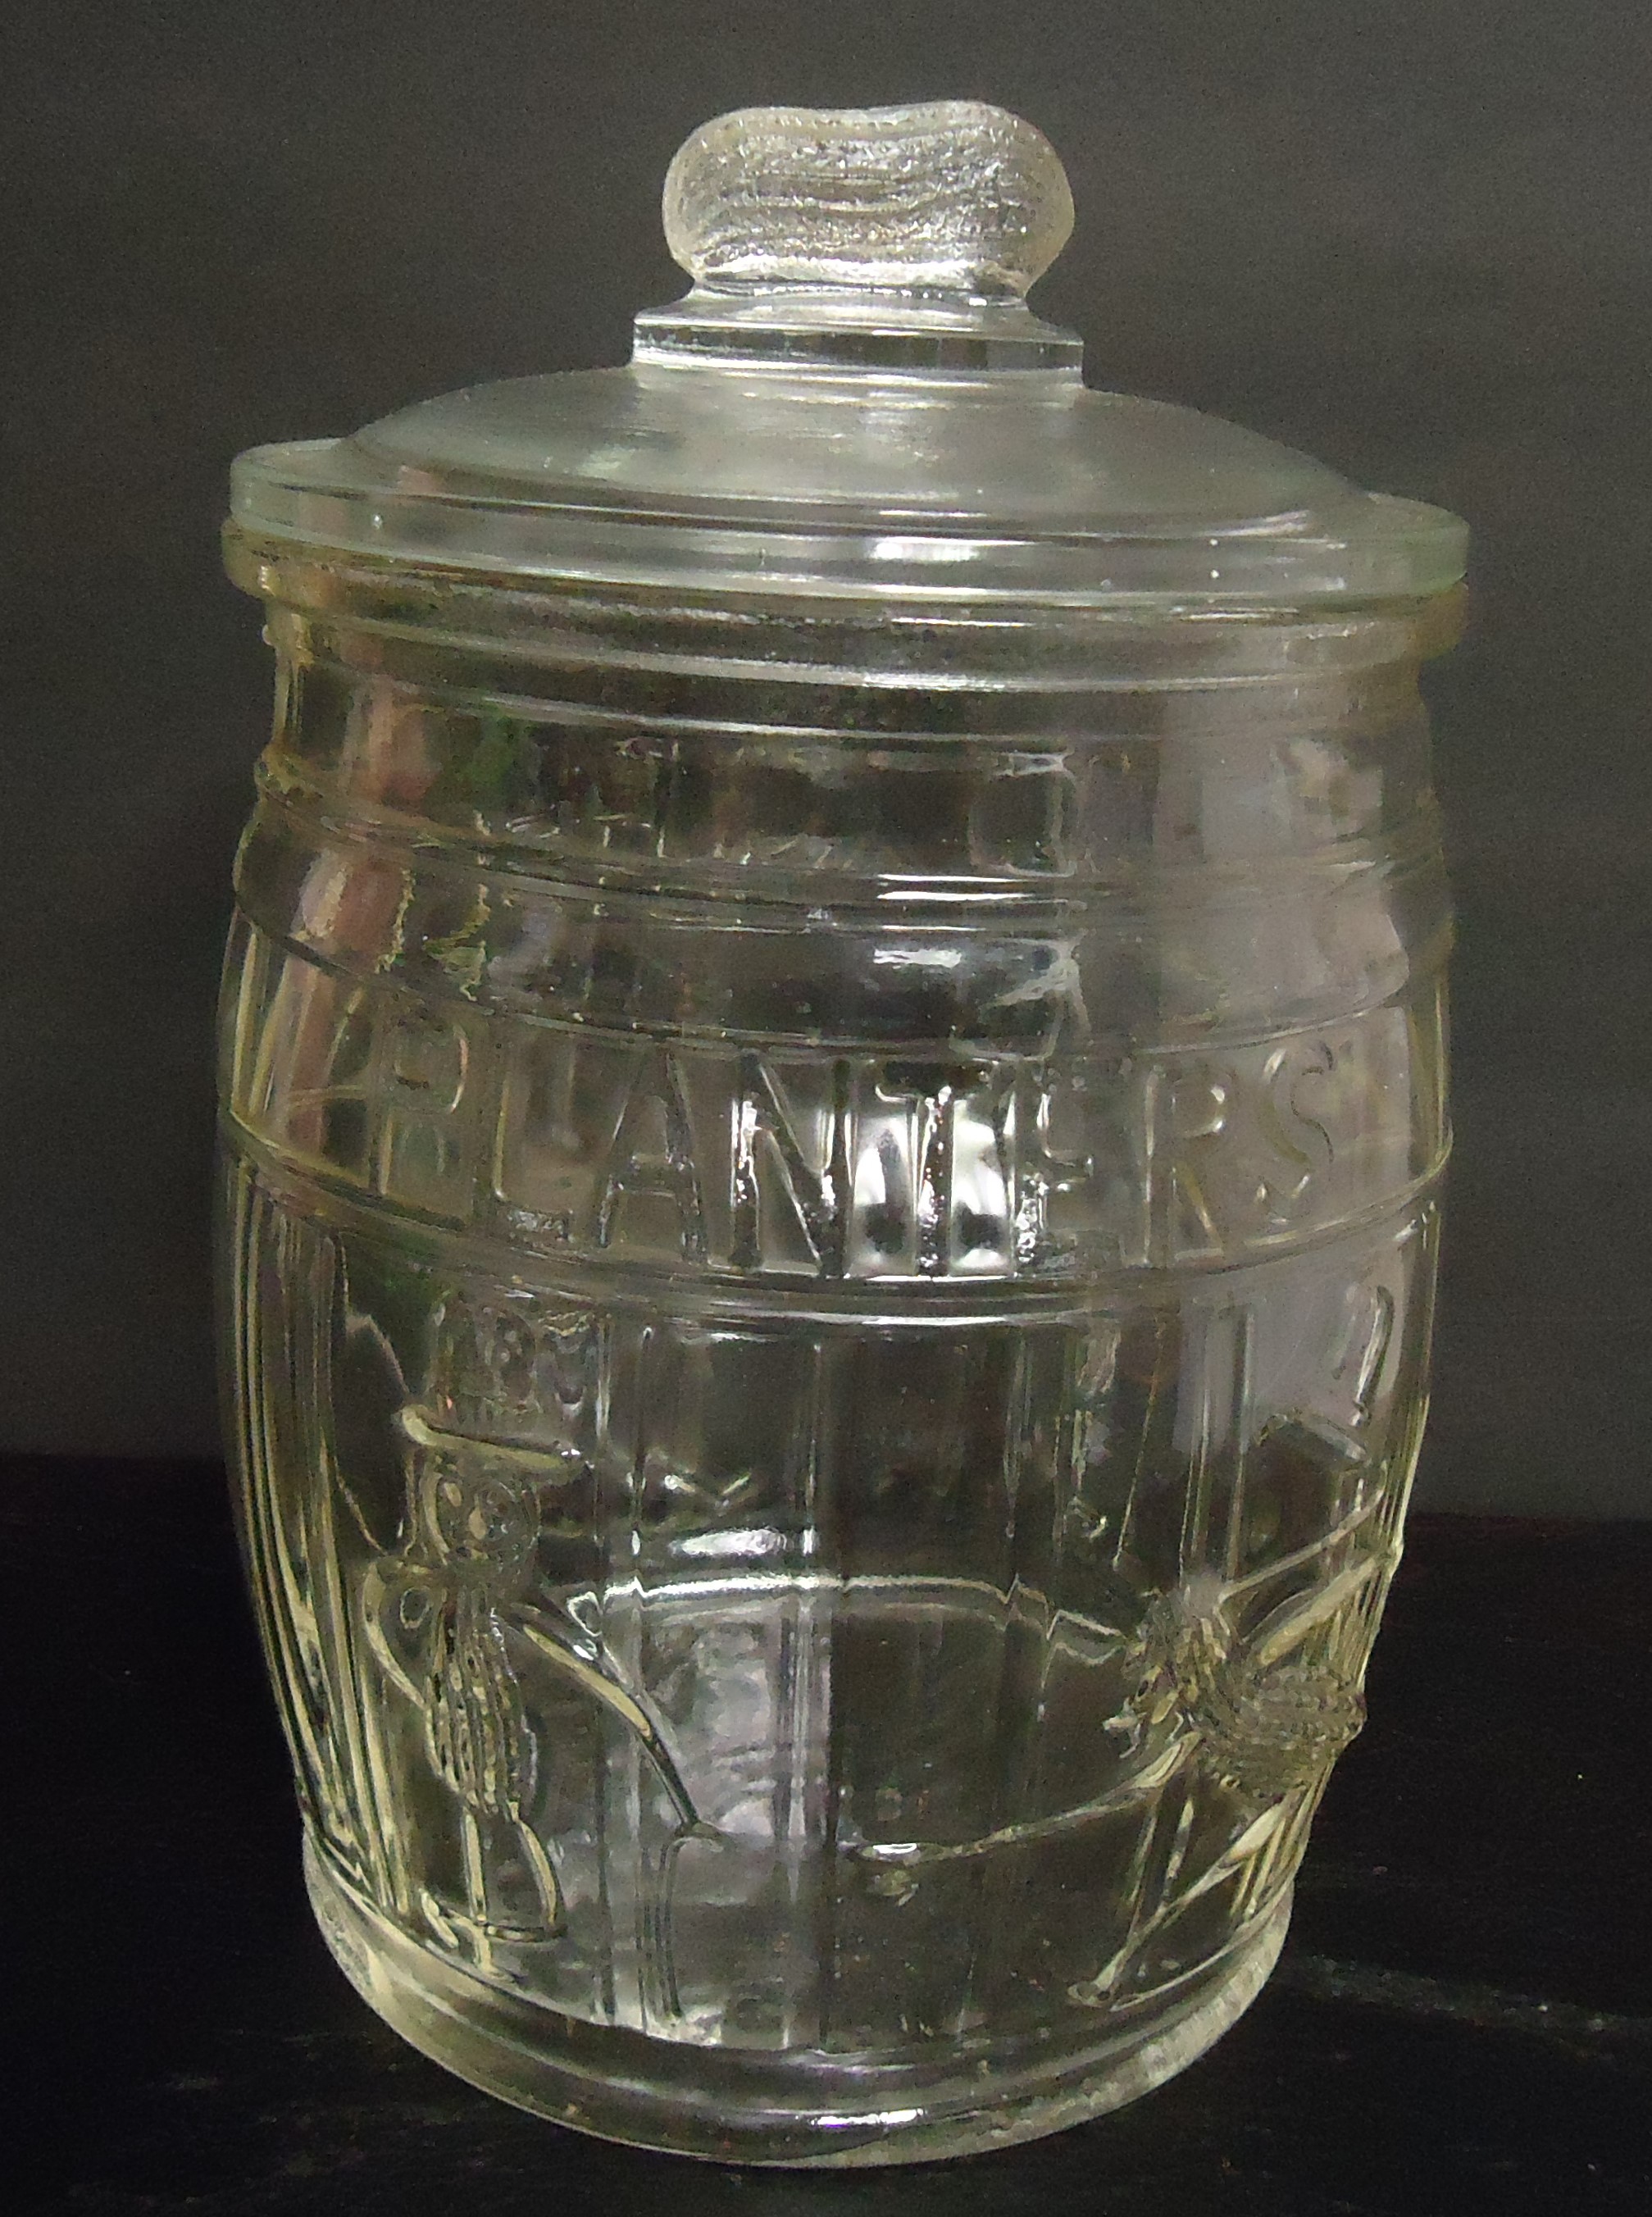 (15) "Planter" Running Man"
Peanut (Clear Glass) Barrel Jar
$75.00